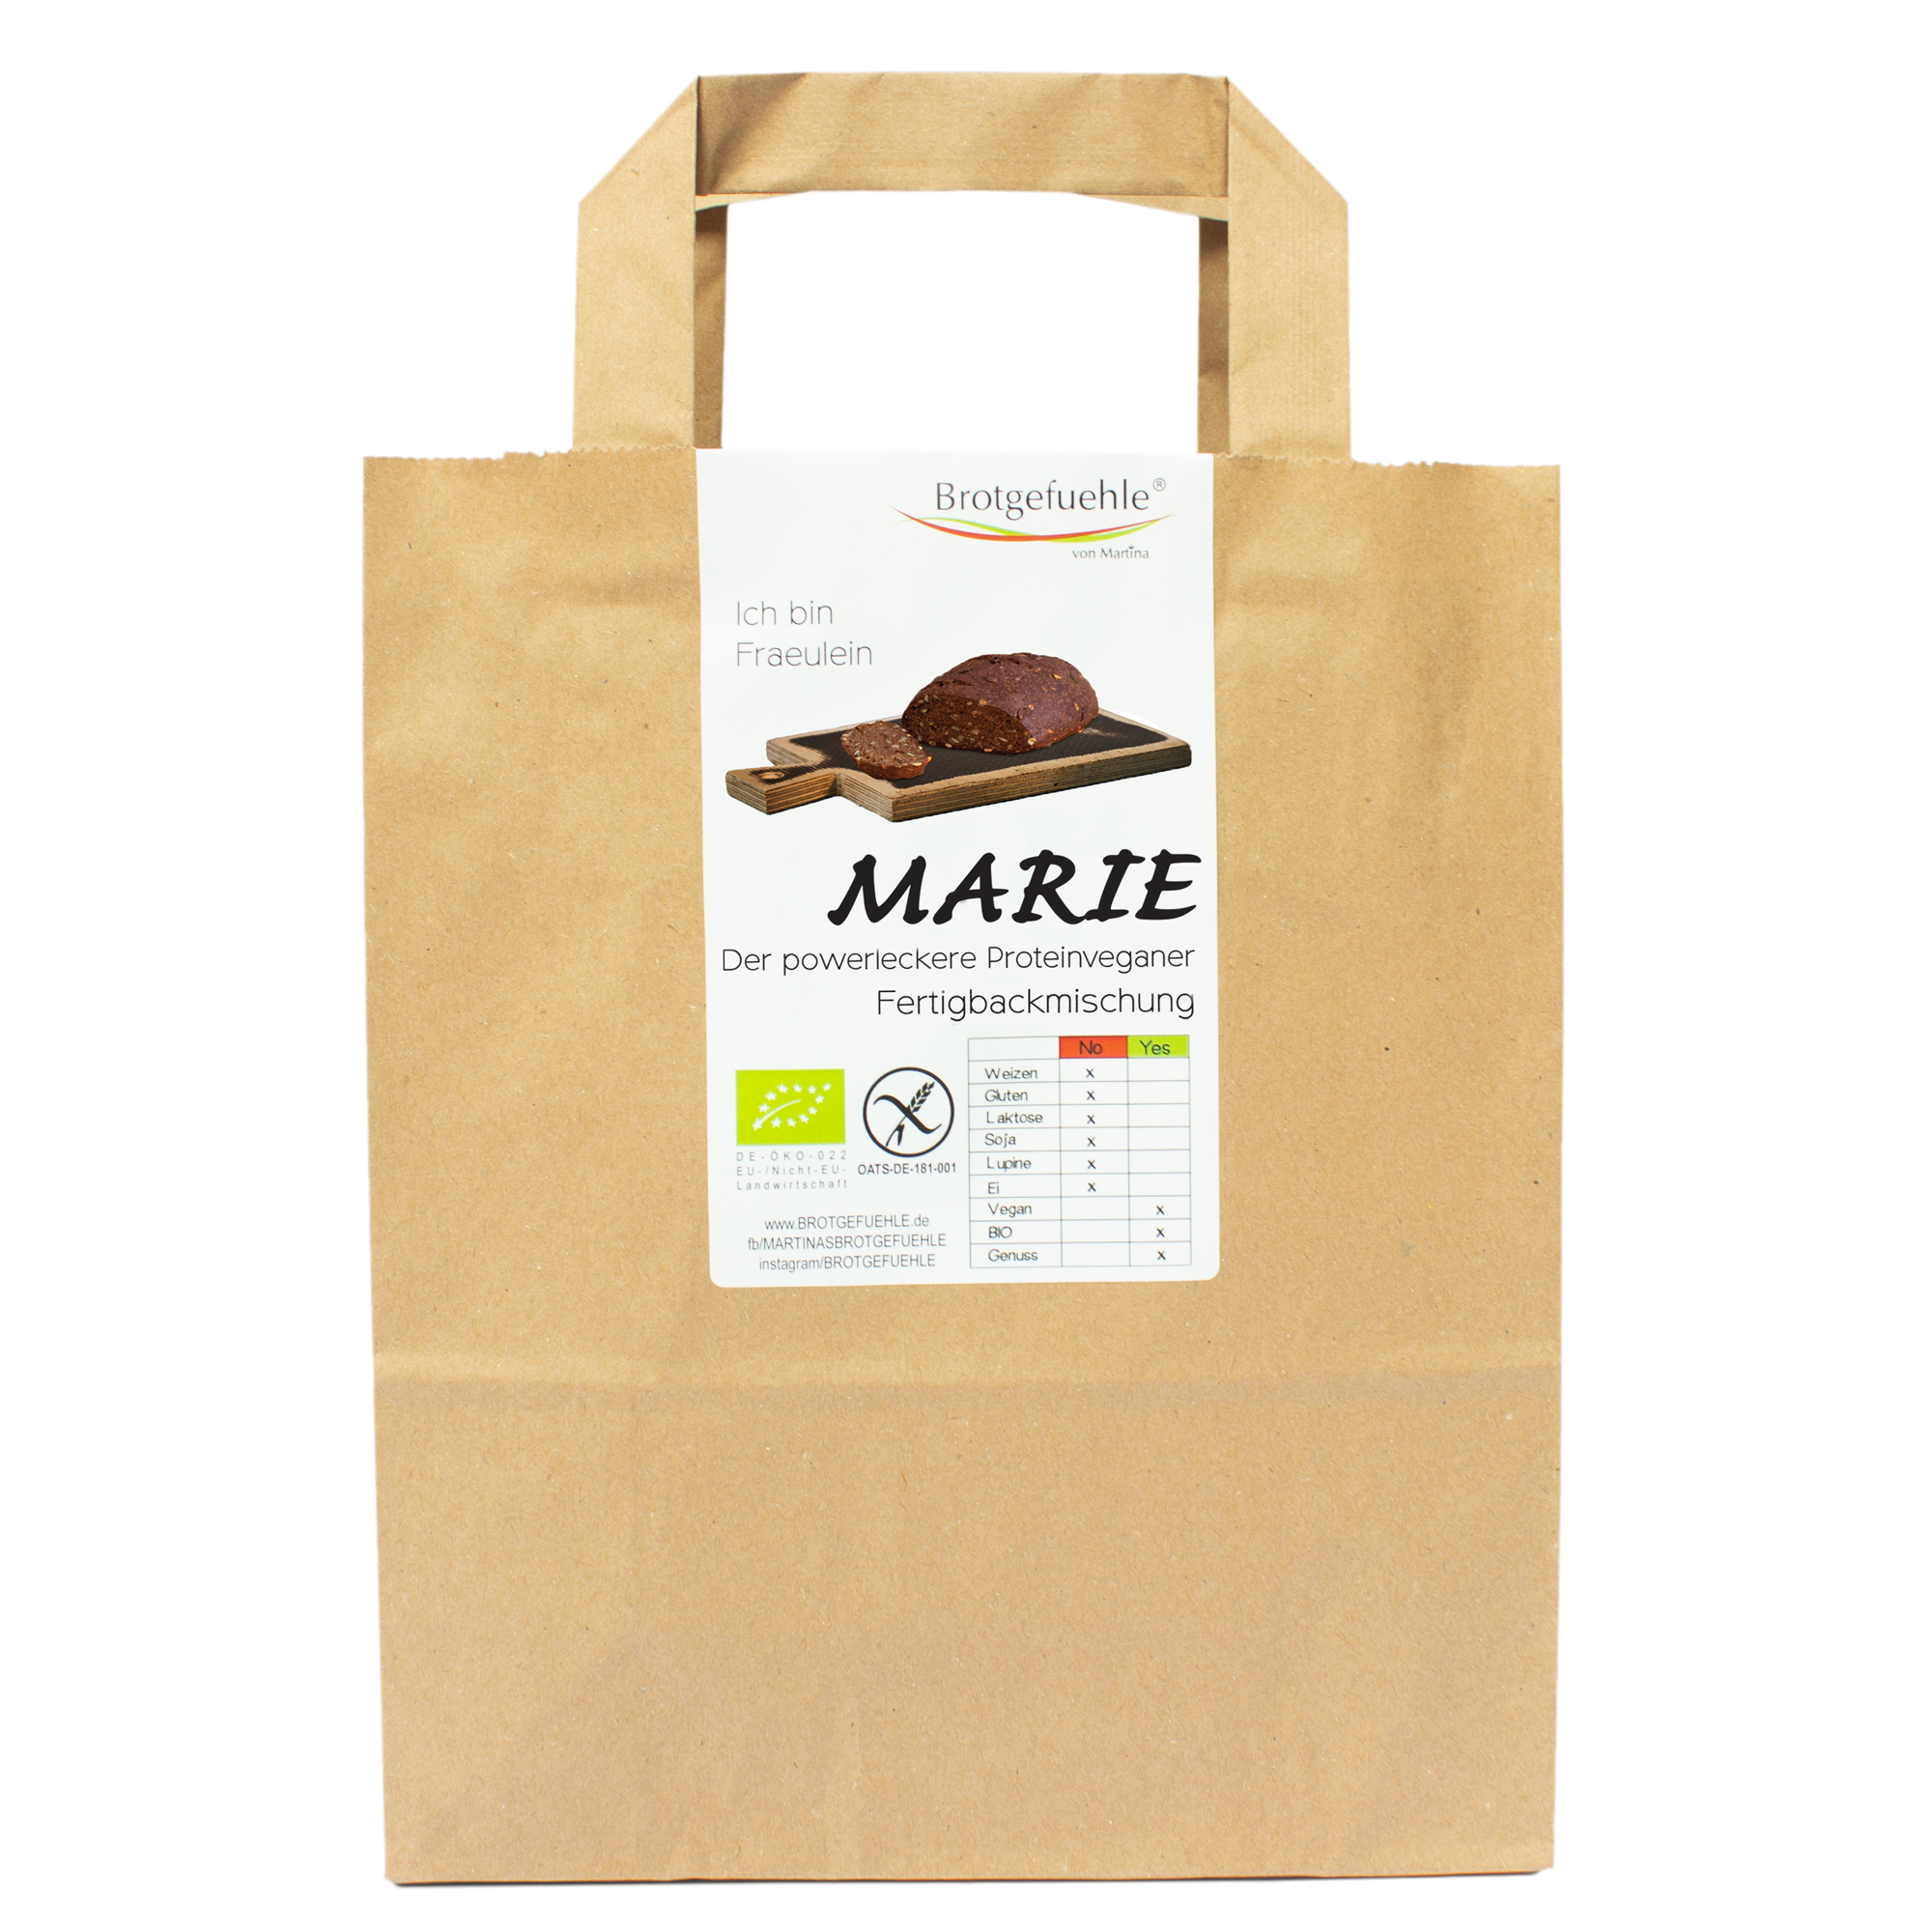 Miss MARIE - ready-to-ba ke mixture- gluten-free, sugar-free